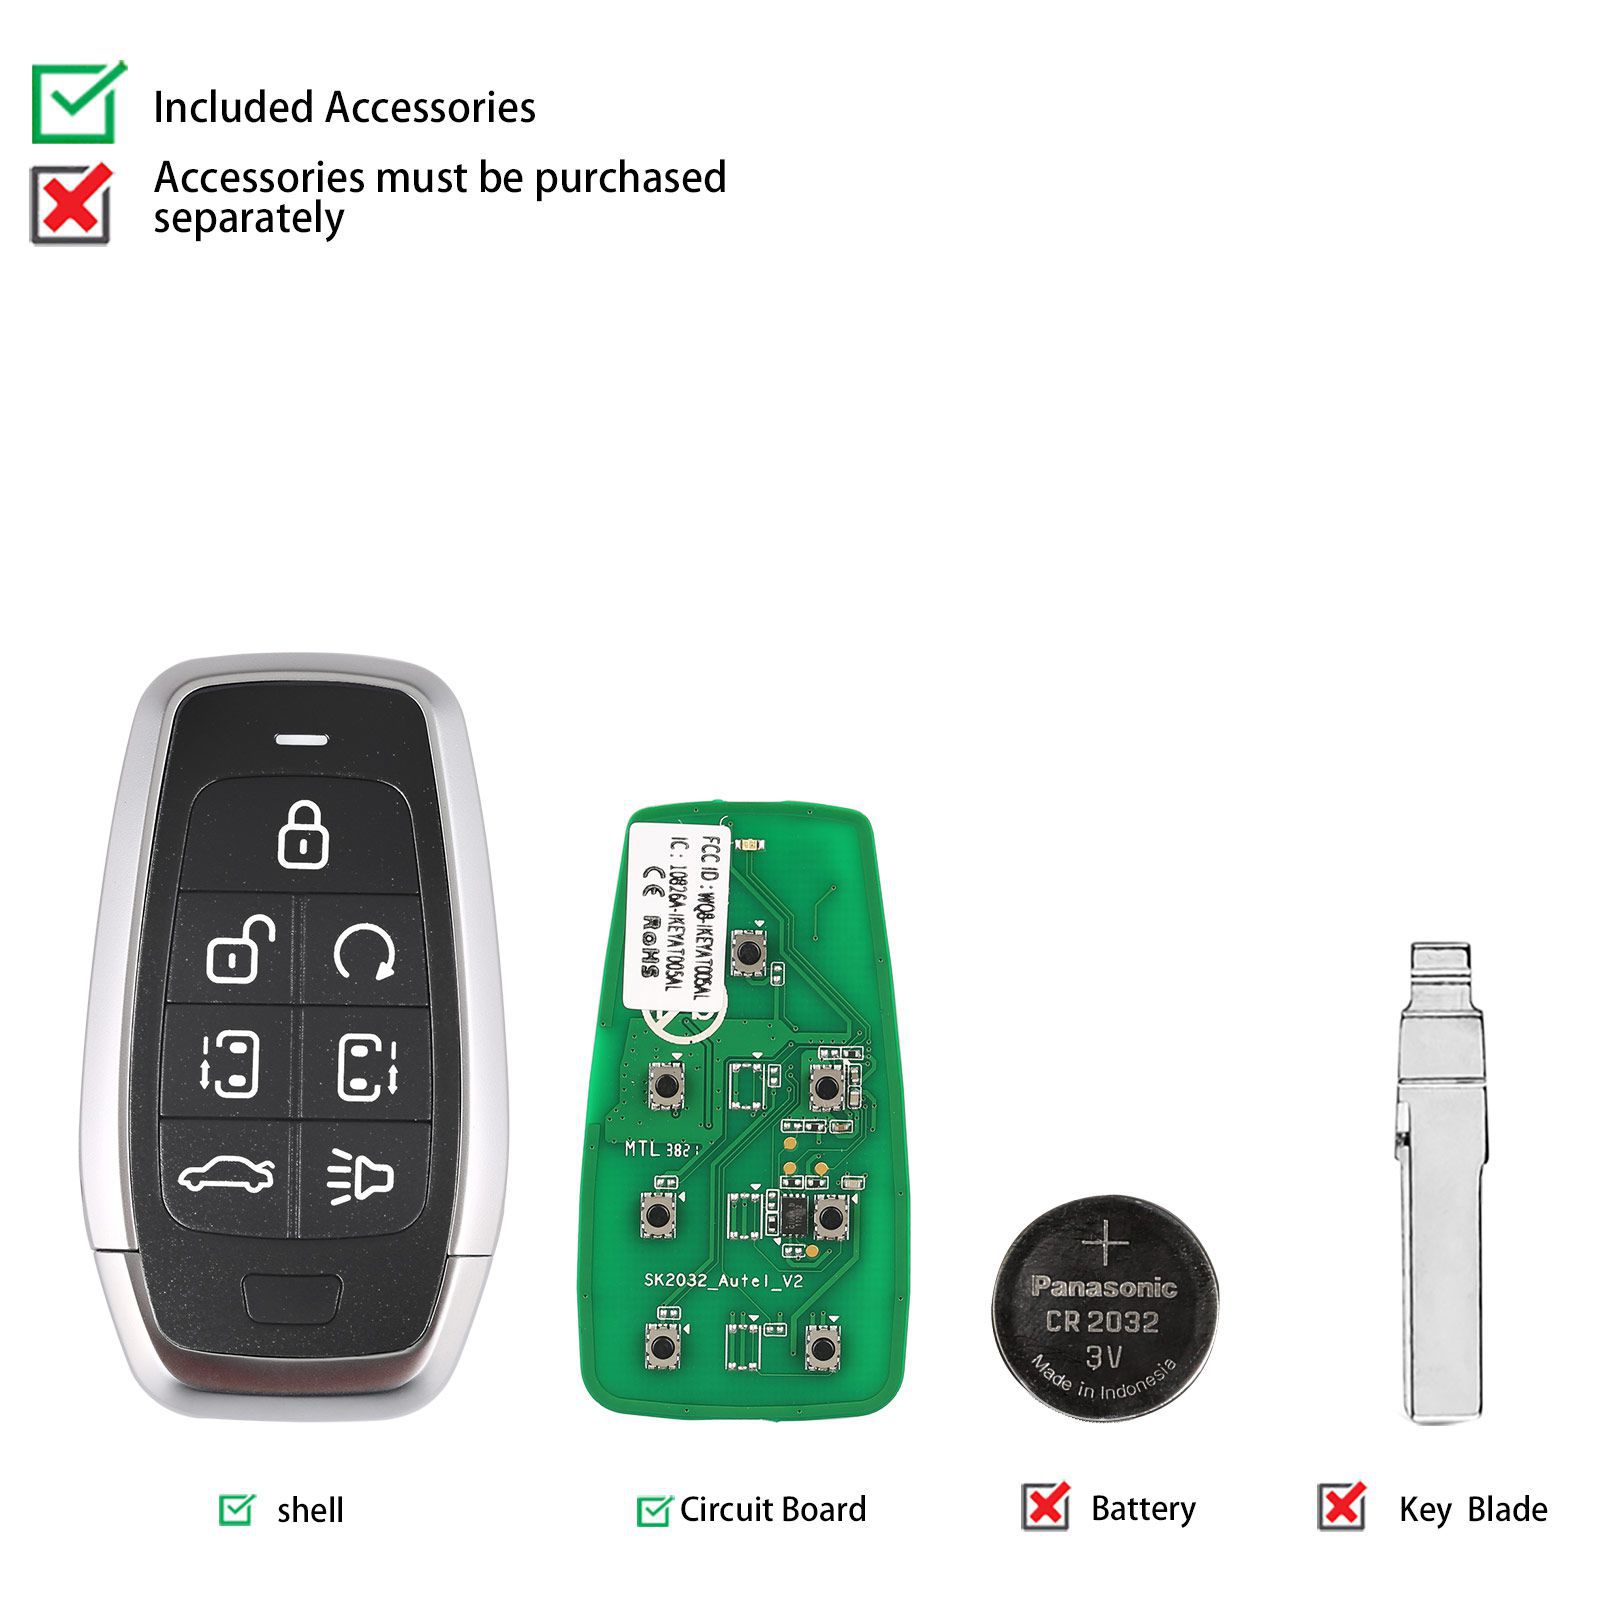 AUTEL IKEYAT007AL 7 Tasten Unabhängige Universal Smart Key 5pcs/lot